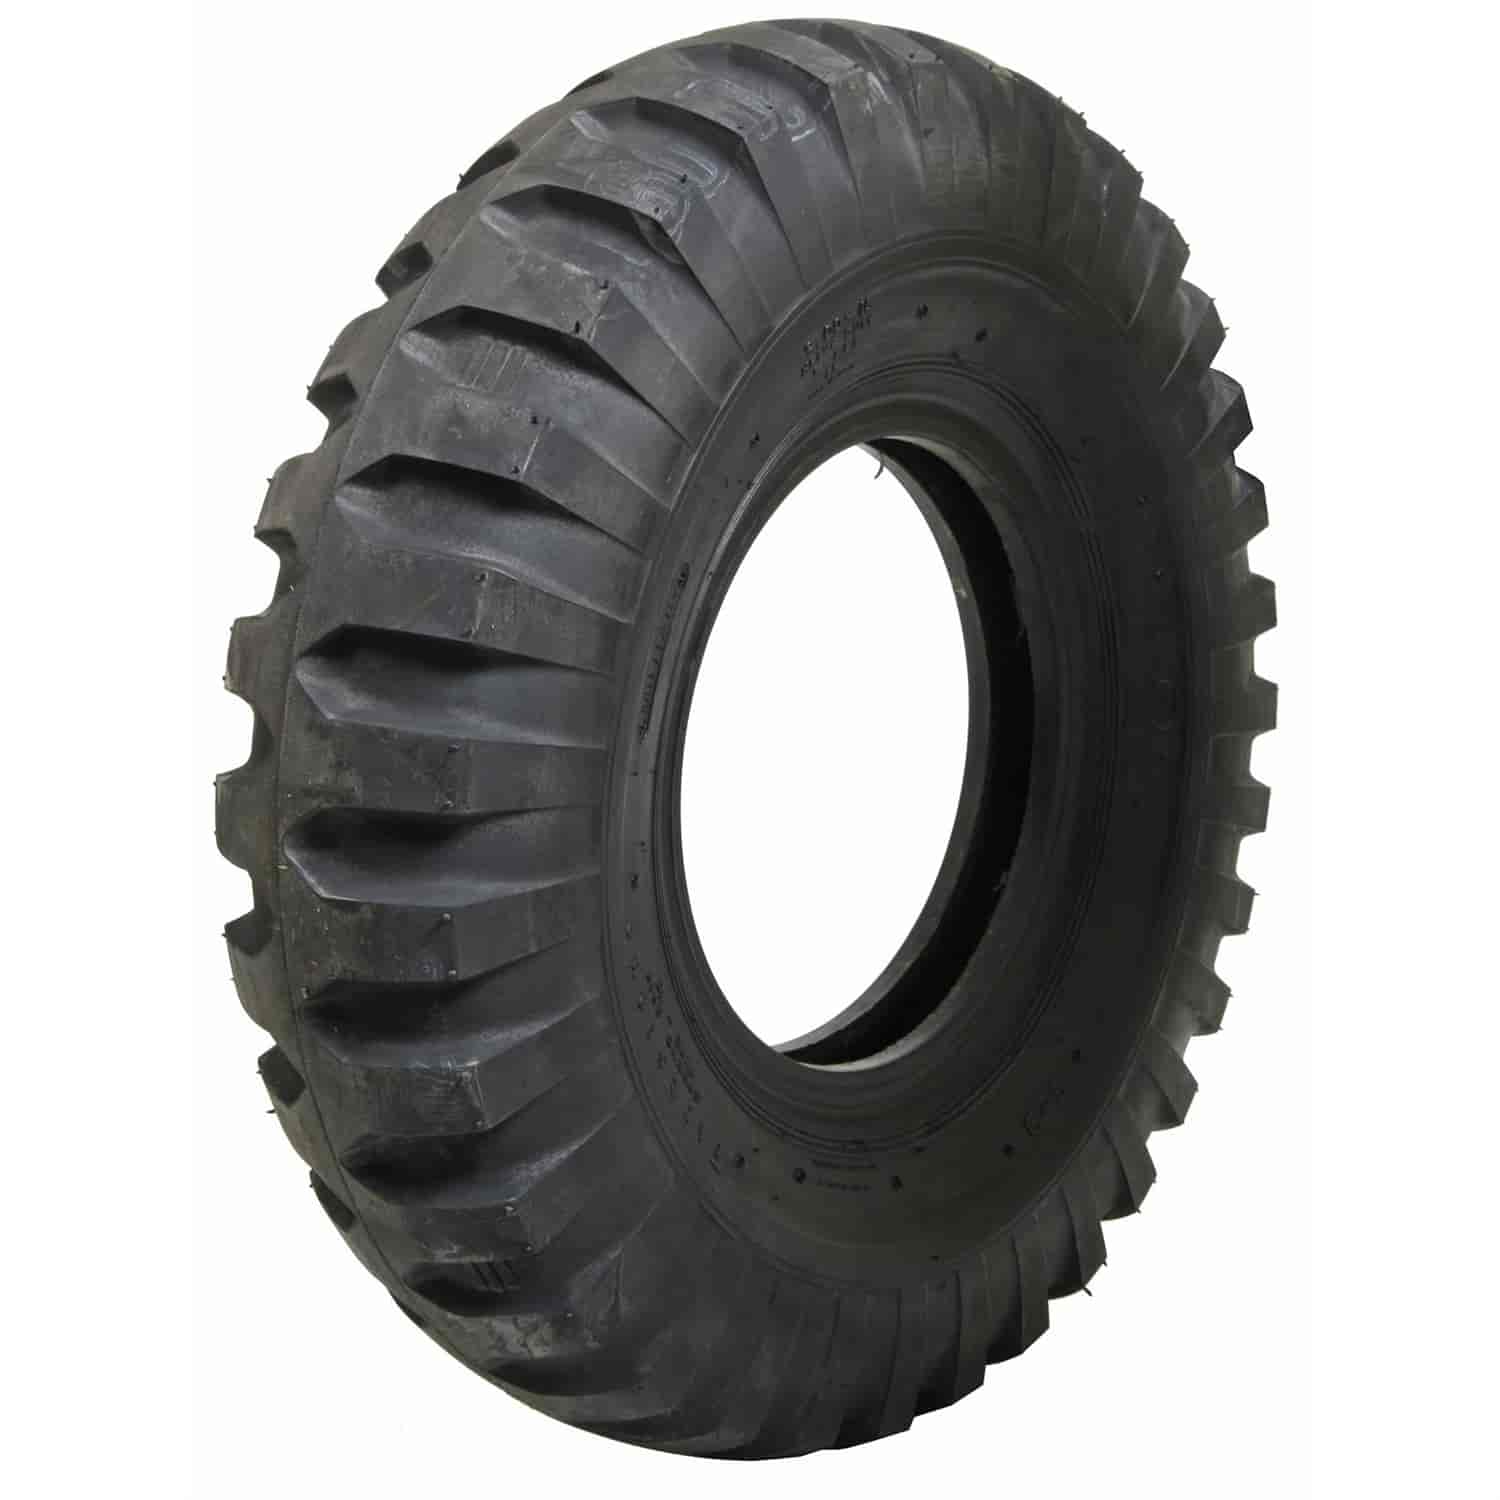 71025 900-16 Firestone NDT Military Bias Ply Tire 900-16